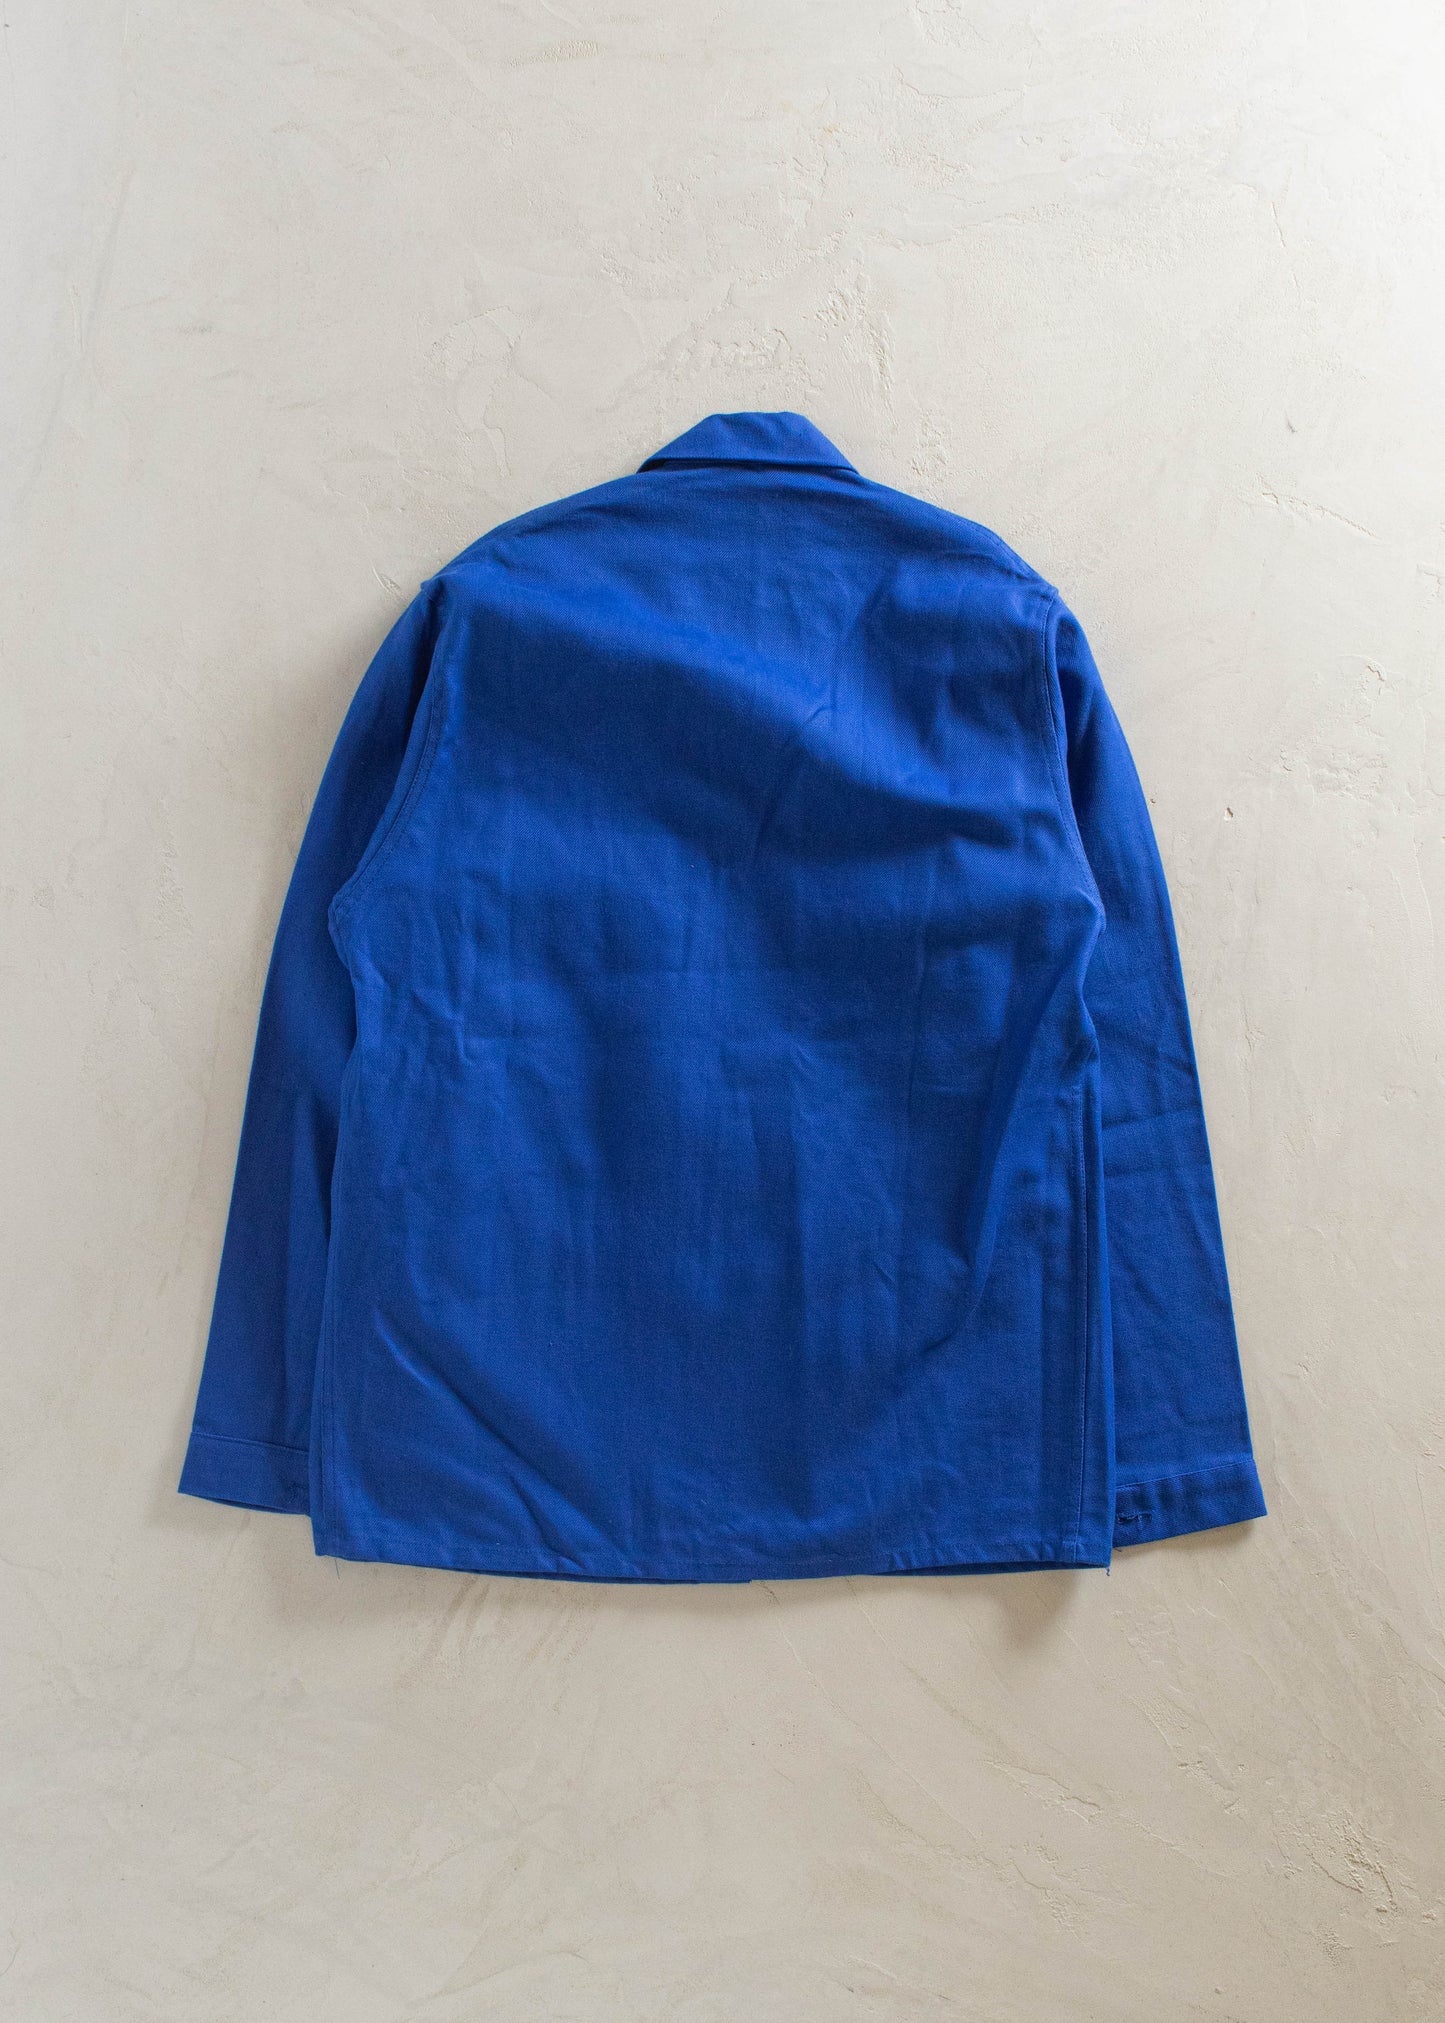 1970s Deadstock Sanforized Macober French Workwear Chore Jacket Size M/L